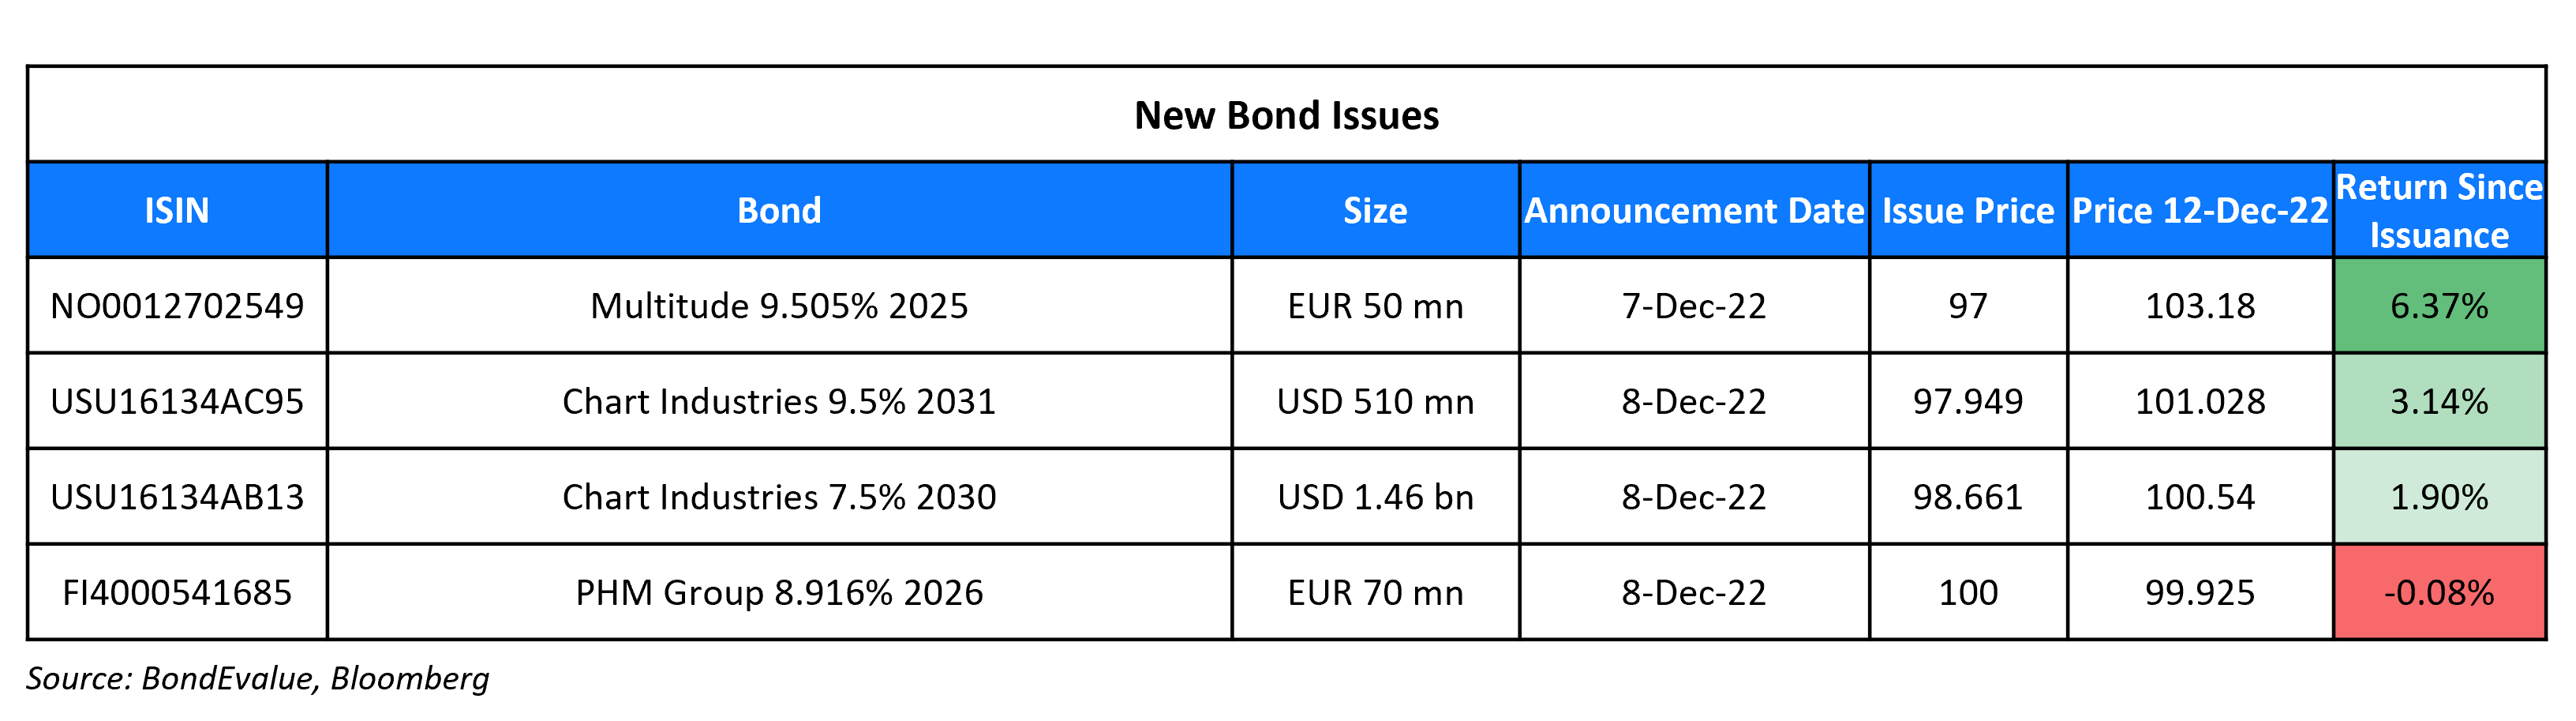 New Bond Issues 12 Dec 22